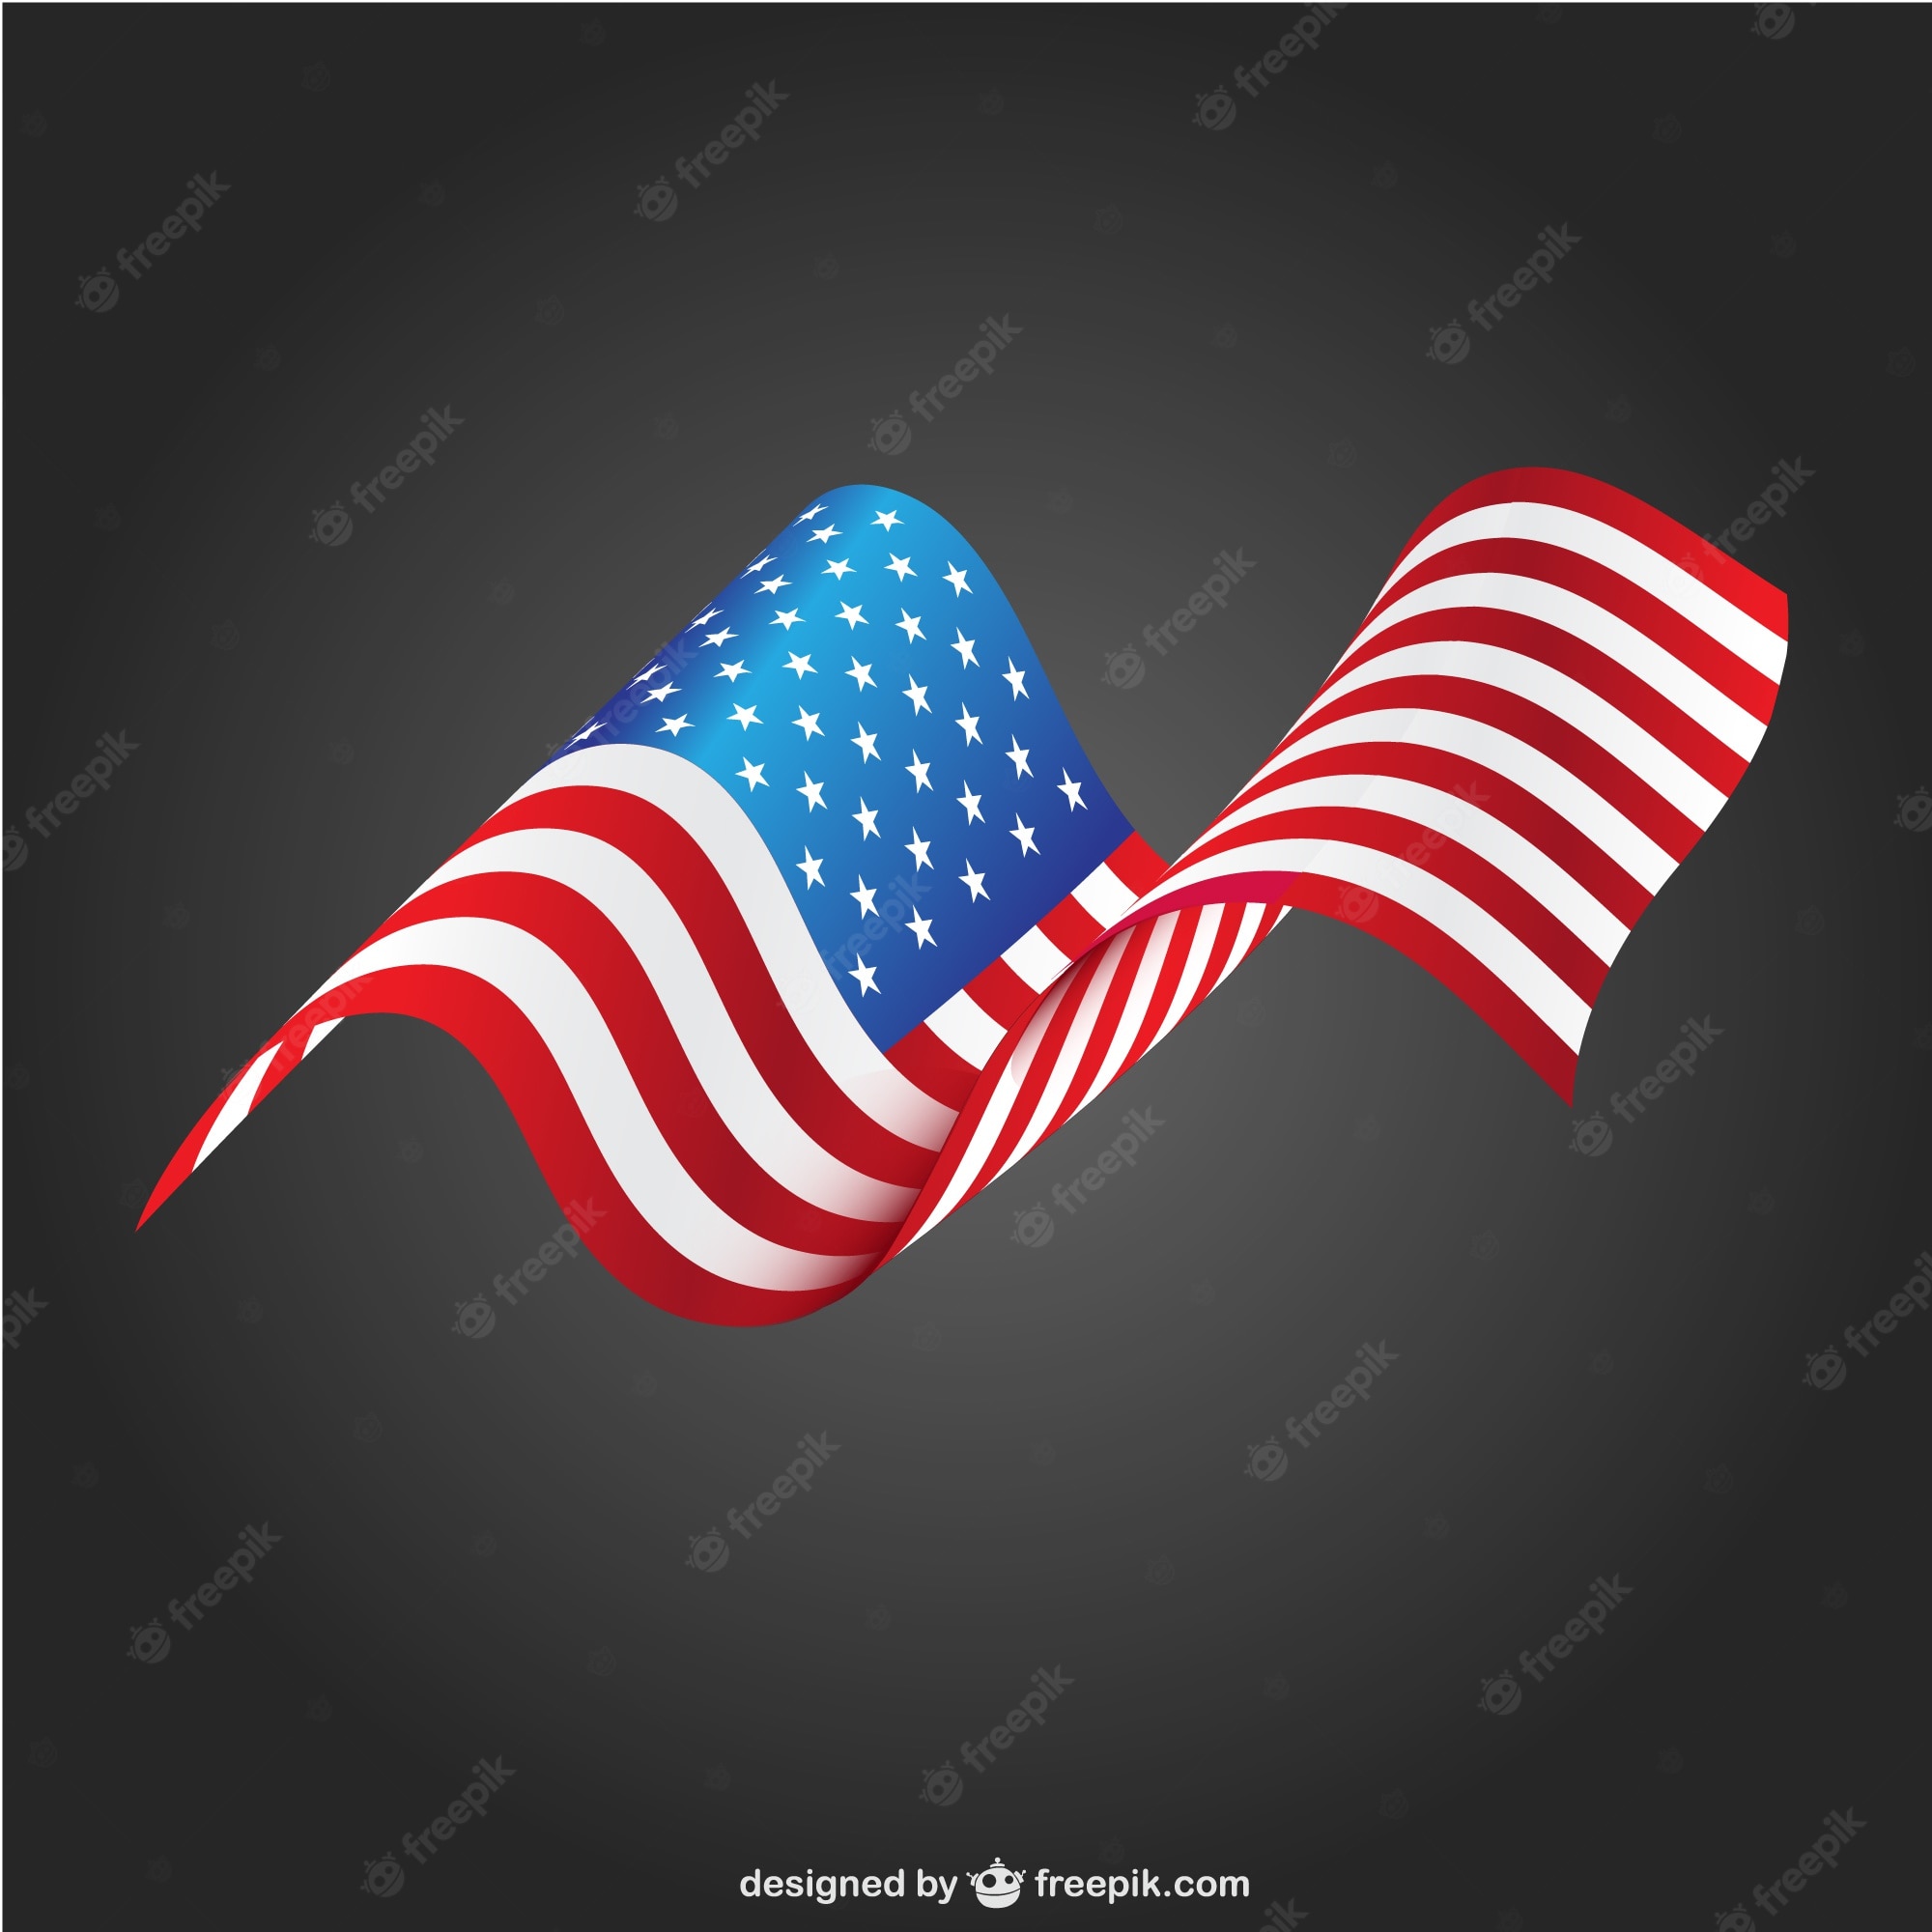 Waving American Flag Wallpapers